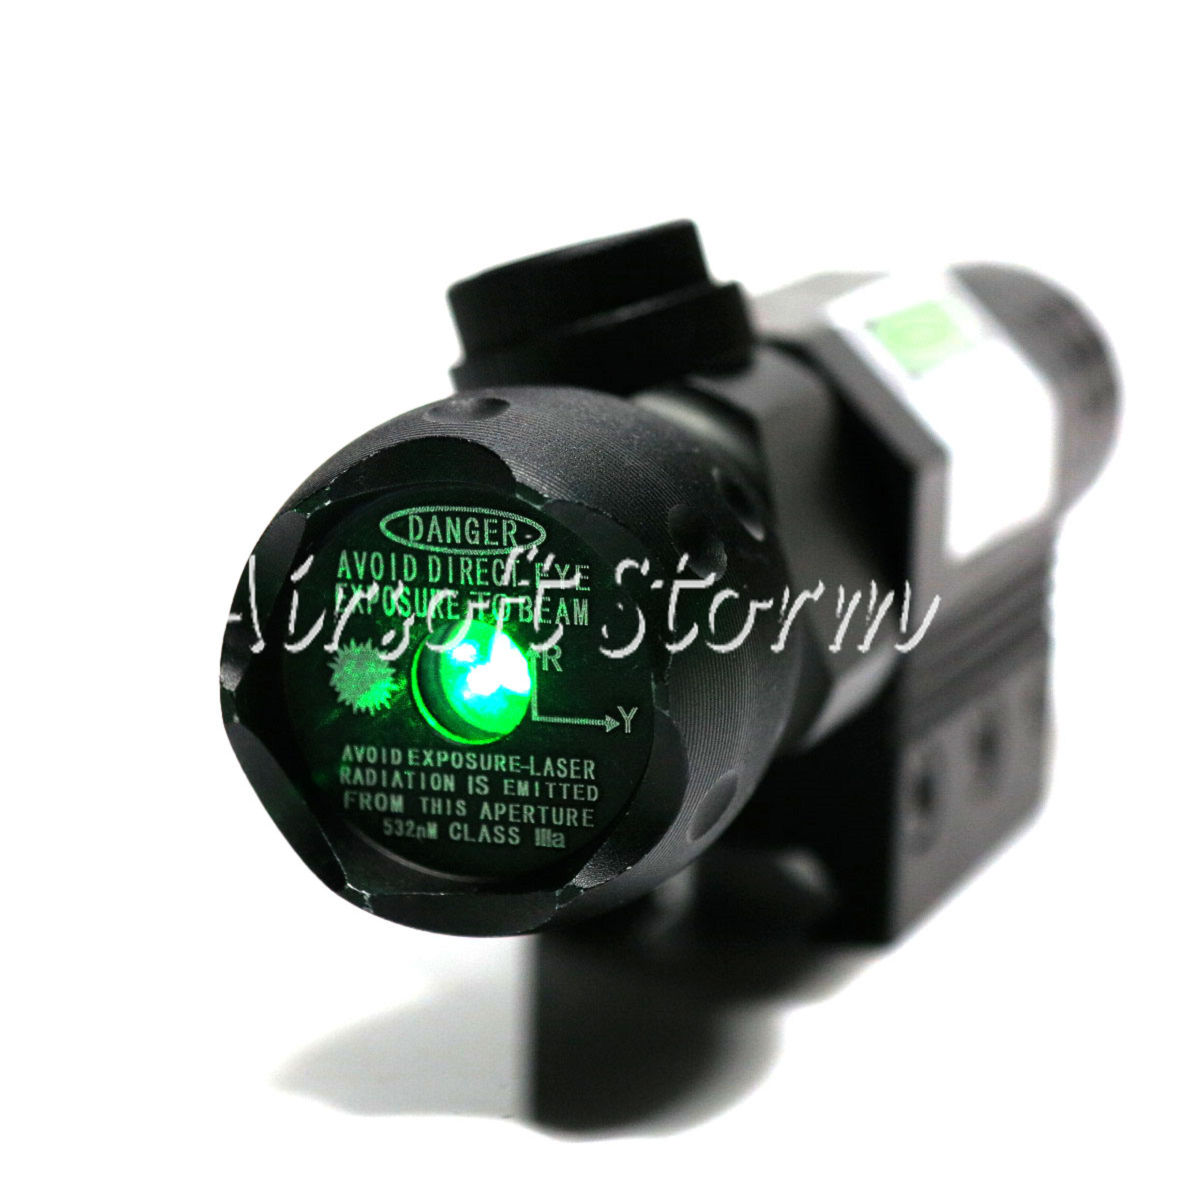 LXGD Tactical Gear Rifle AEG Green Laser Tactical Head Sight Pointer JG-021